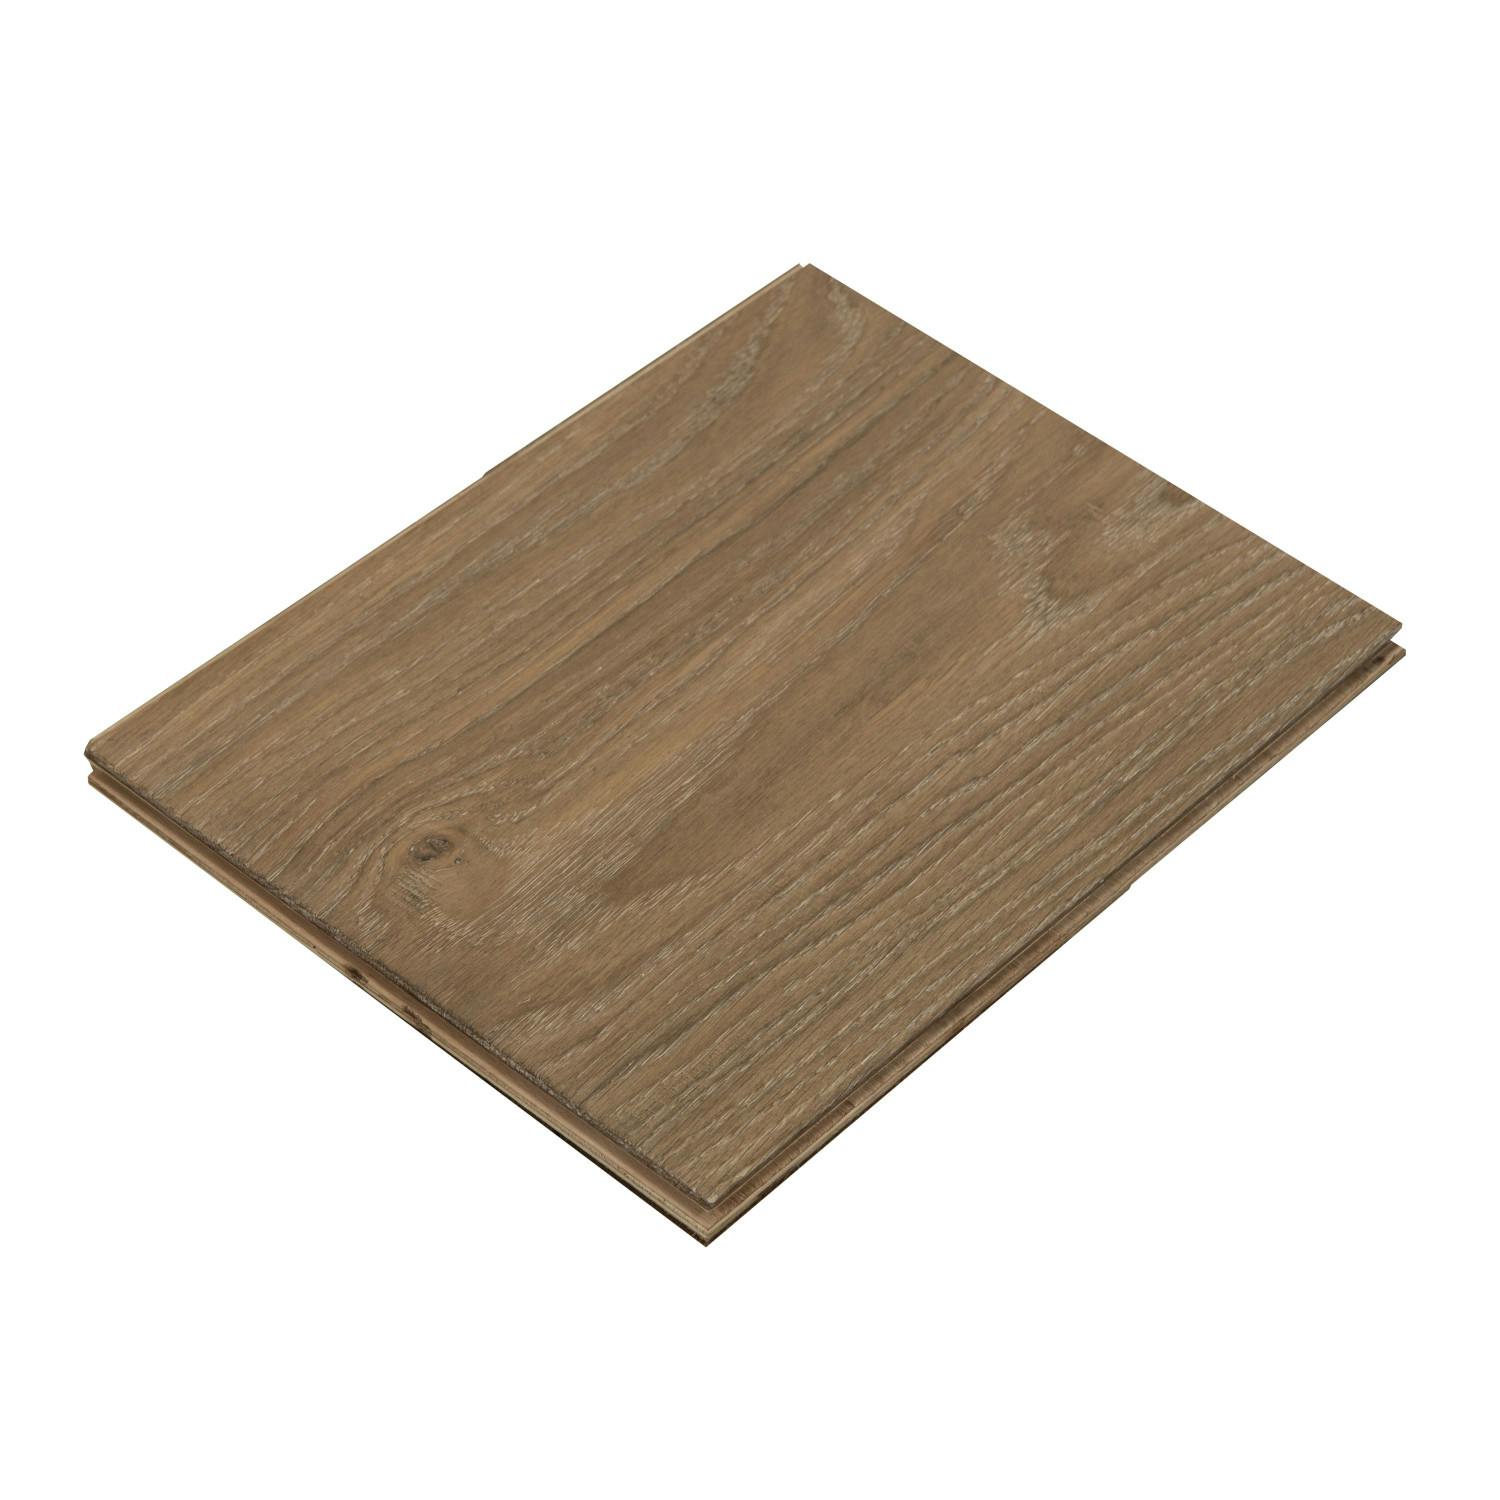 Sample - Knotty Barrel Oak Extra Wide T&G Cali Hardwoods Flooring